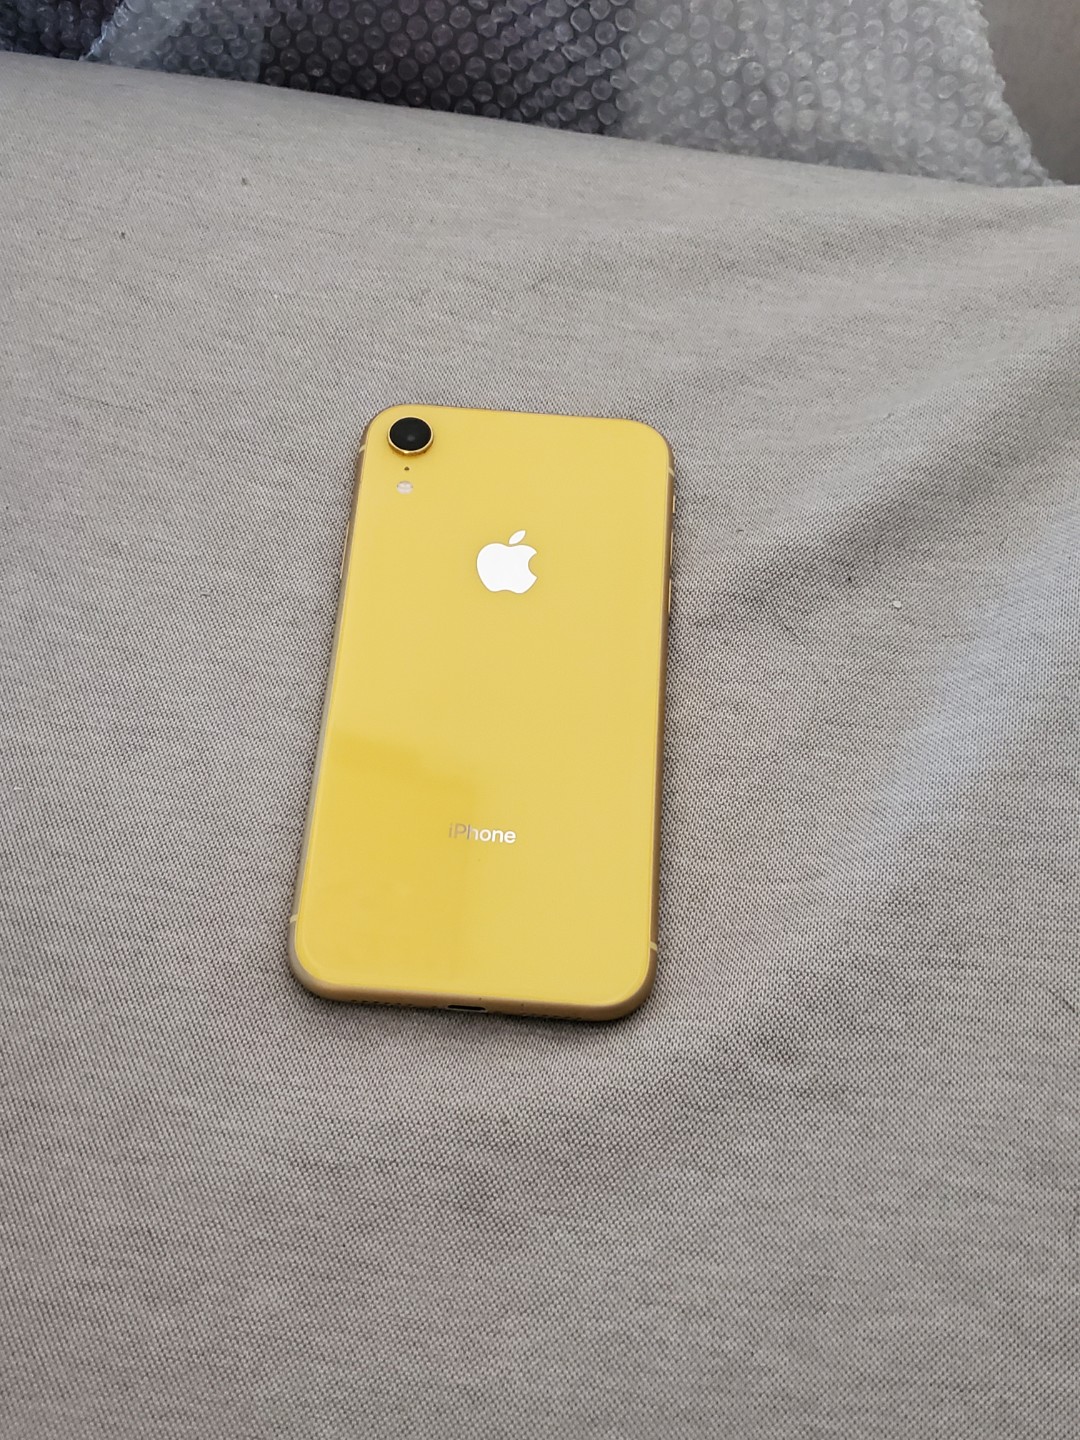 Iphone XR Yellow 128GB